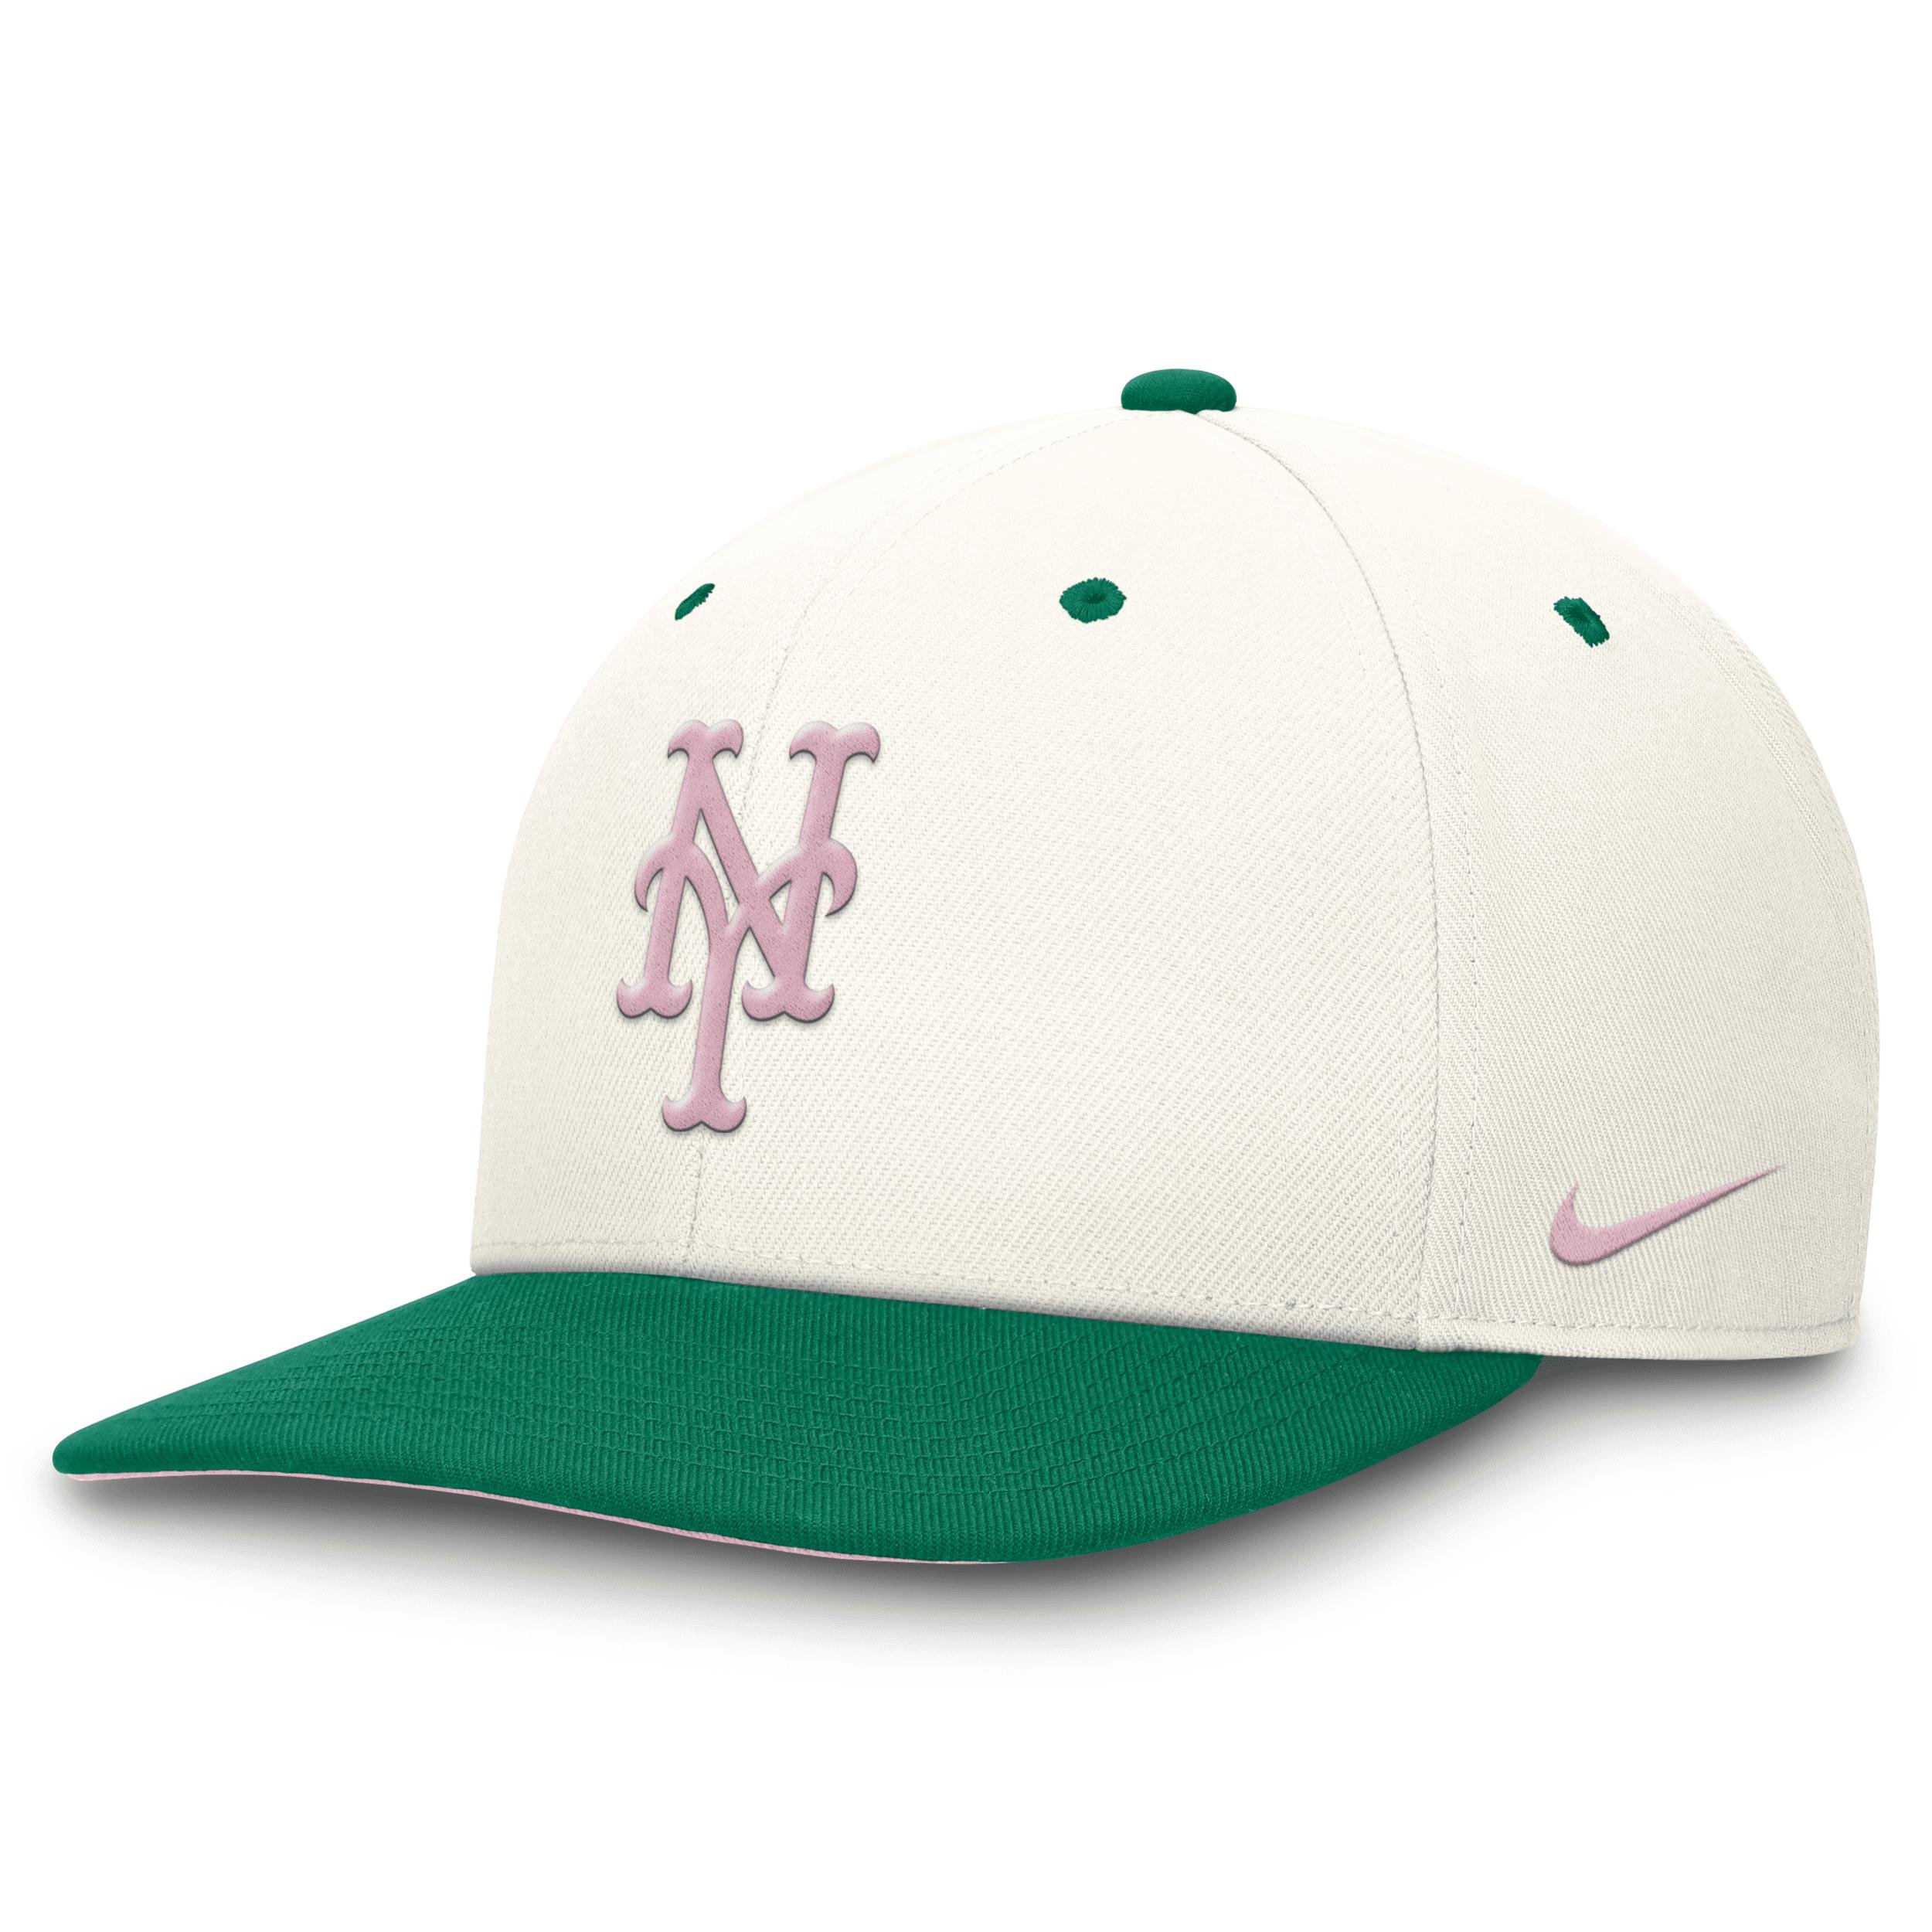 New York Mets Sail Pro Nike Unisex Dri-FIT MLB Adjustable Hat by NIKE